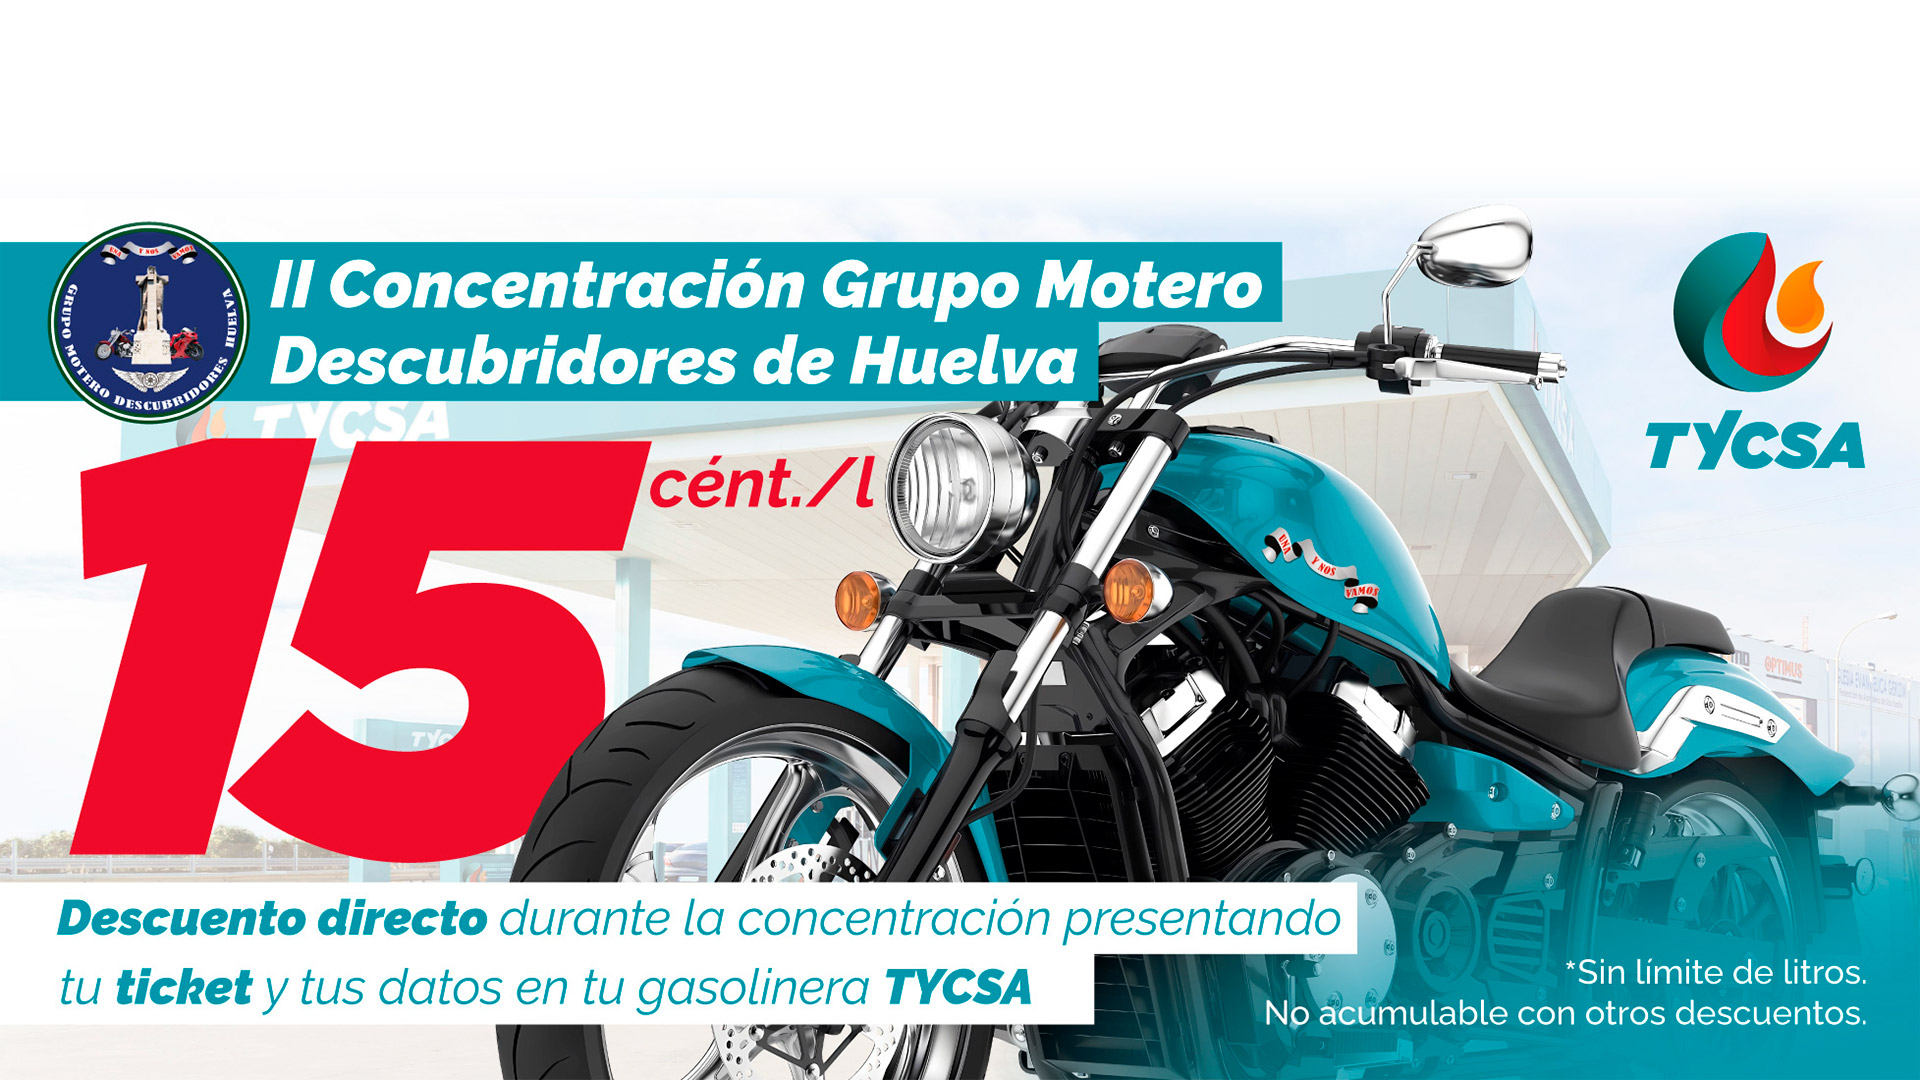 <strong>Apuesta por Huelva</strong><br/><strong>y gana 10 cent./l</strong><br/>Con la tarjeta cliente TYCSA